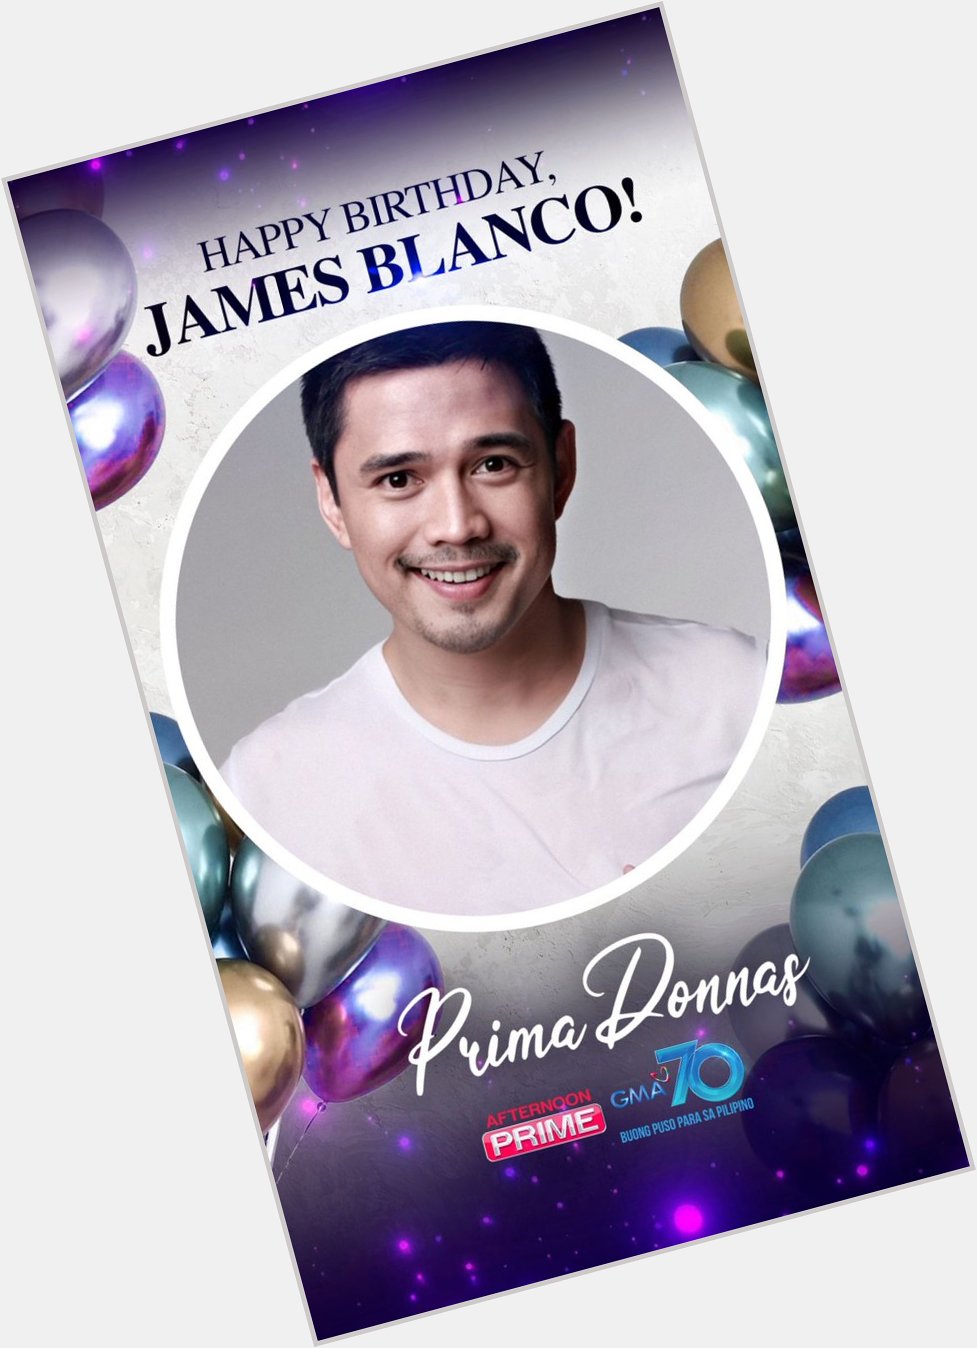 Maligayang kaarawan sa\yo, Ruben!

Let\s all greet Mr. James Blanco a very happy birthday.   